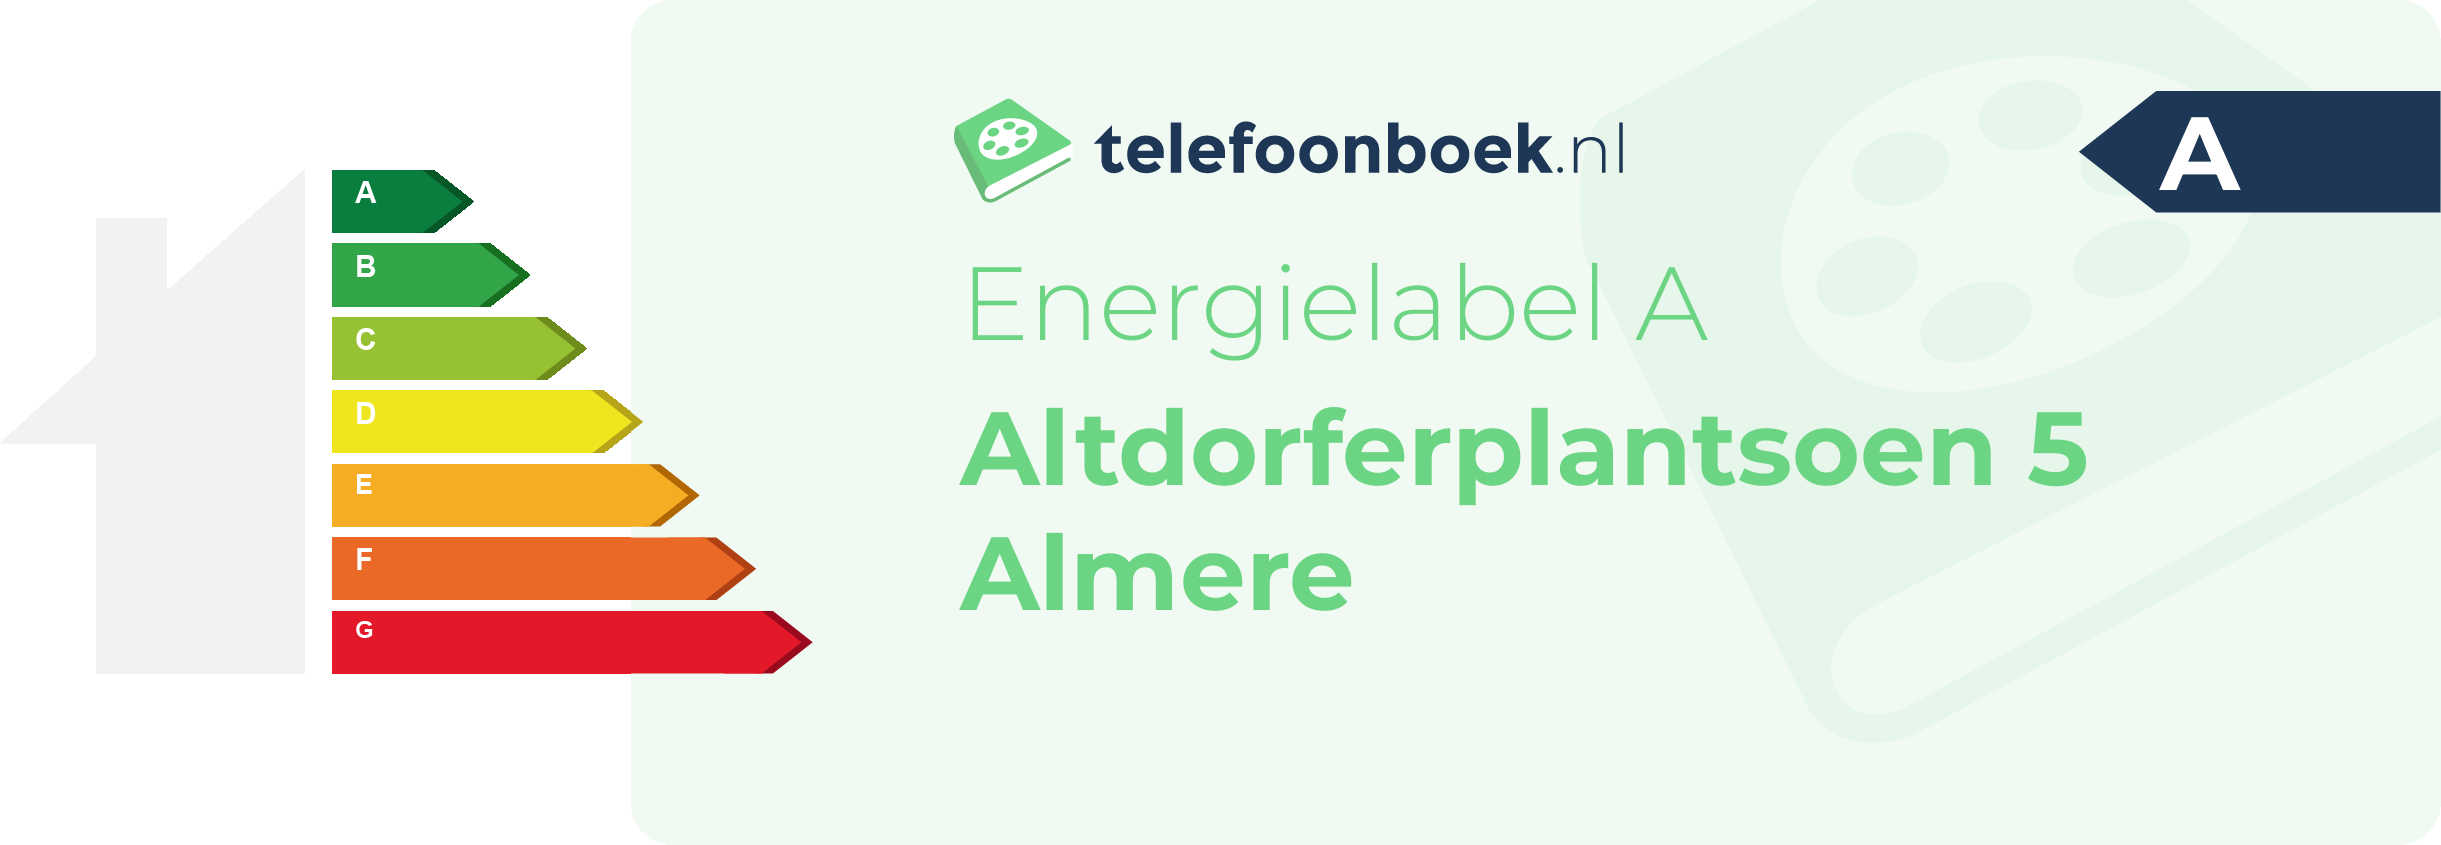 Energielabel Altdorferplantsoen 5 Almere